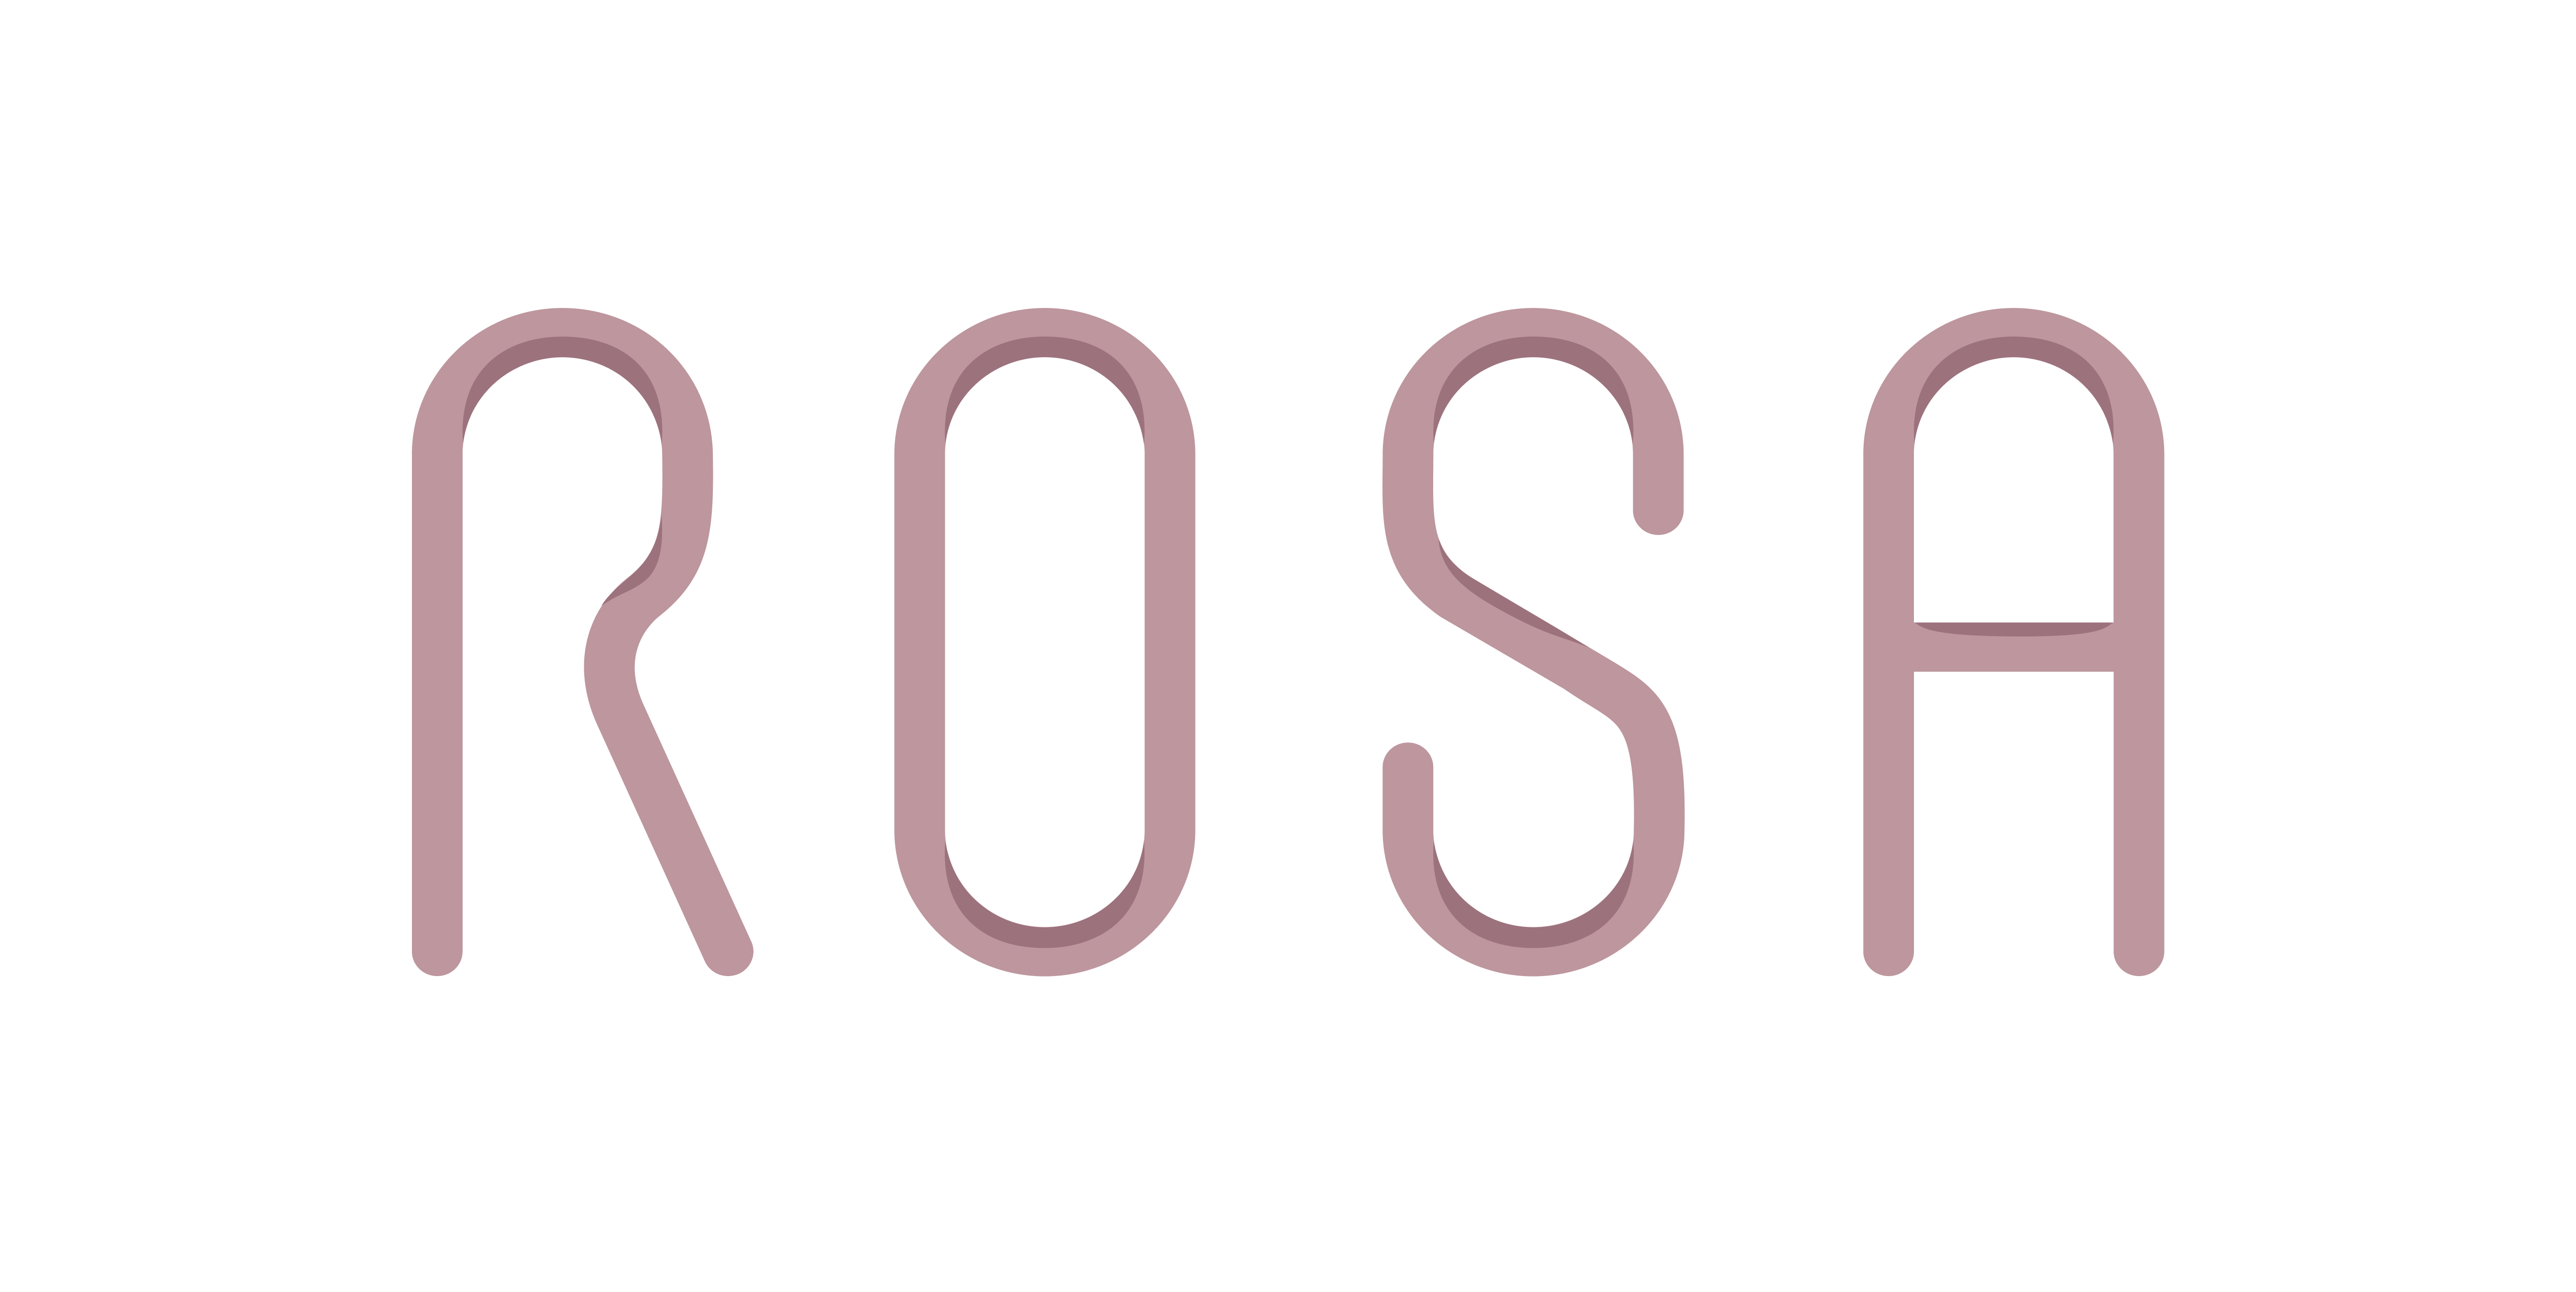 Rosa Logo